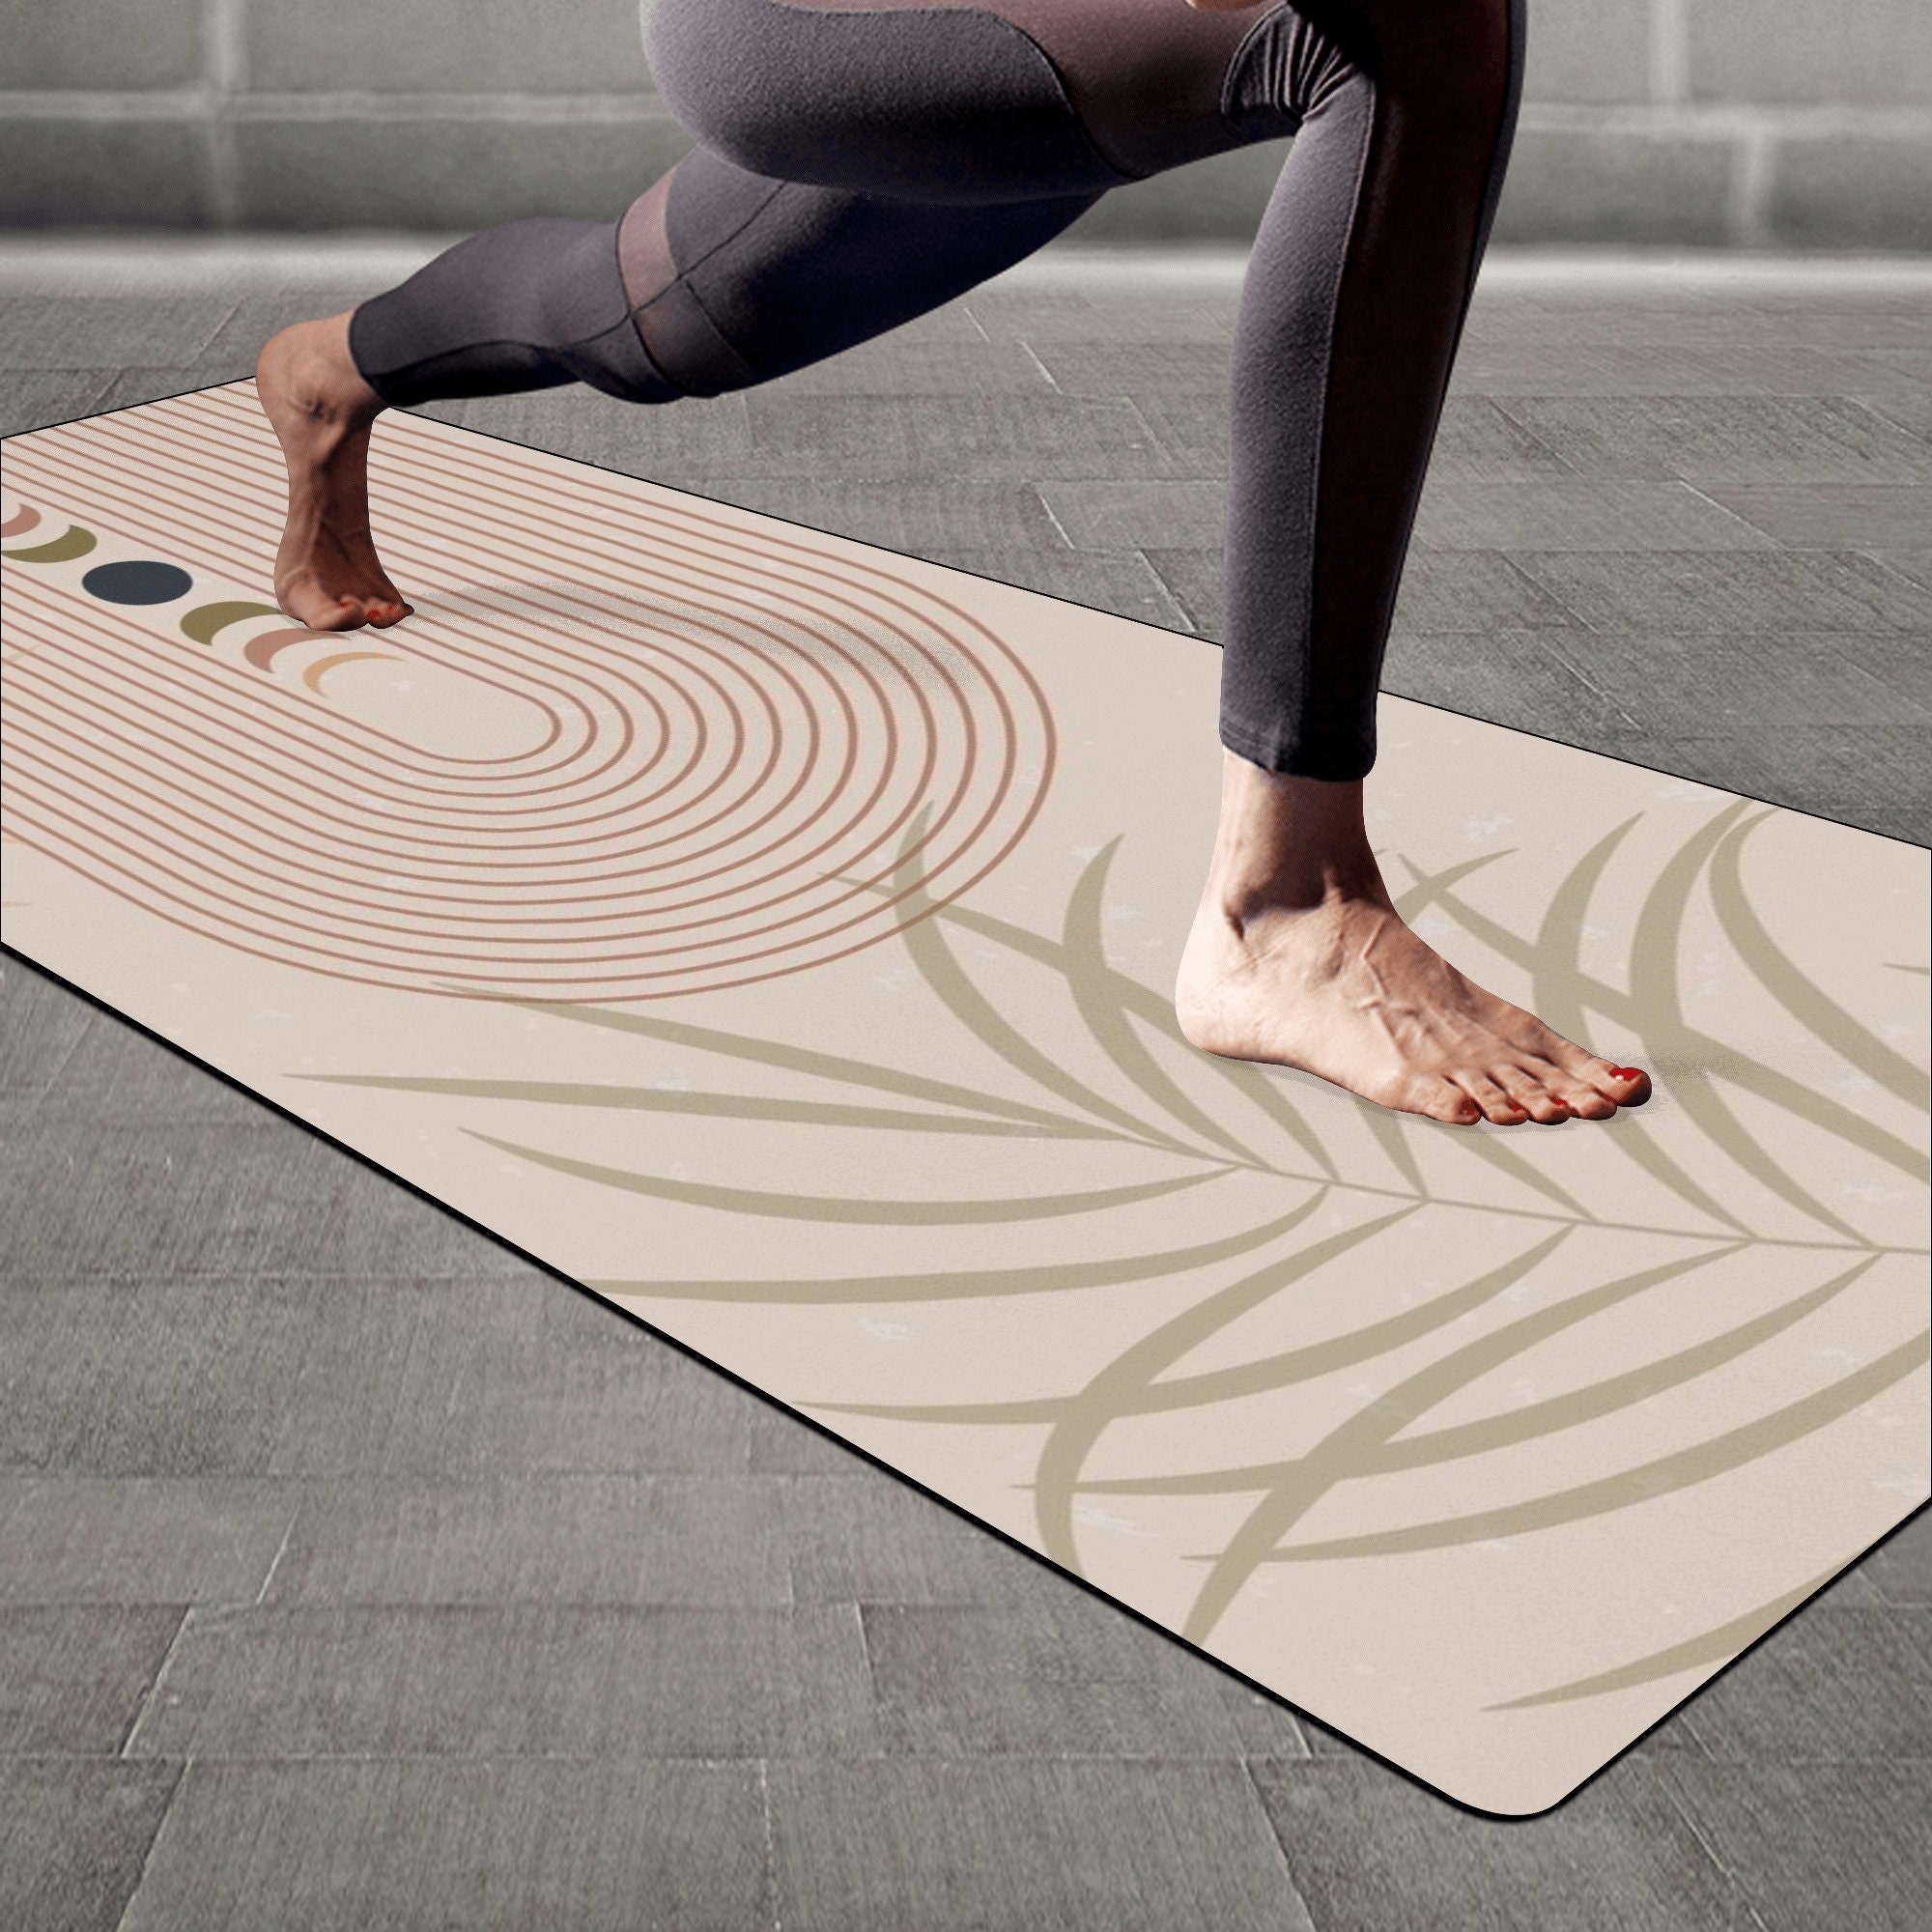 Gaiam Premium Print Reversible Yoga Mat, Elephant, 6mm, Mats -  Canada